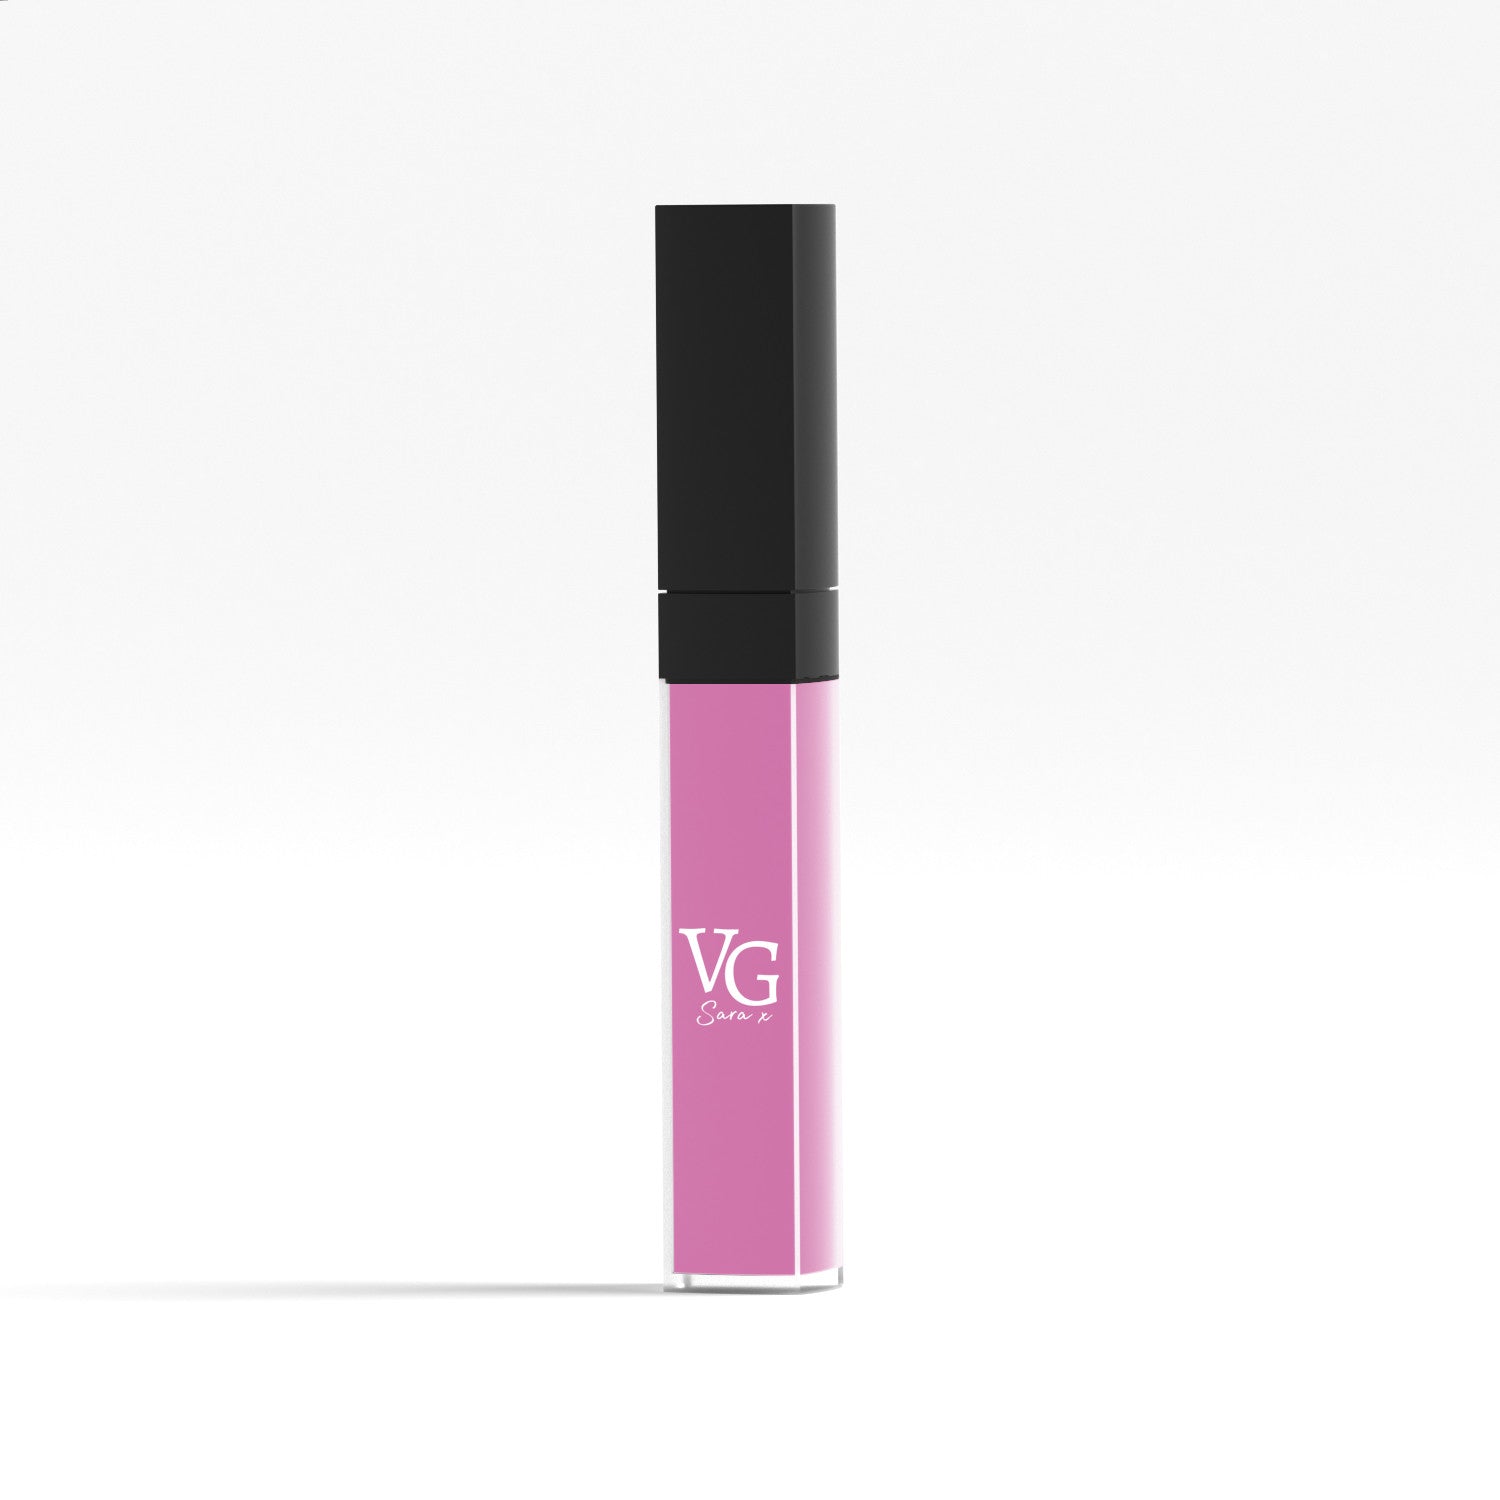 Vegan liquid lipstick in vibrant pink with VG label